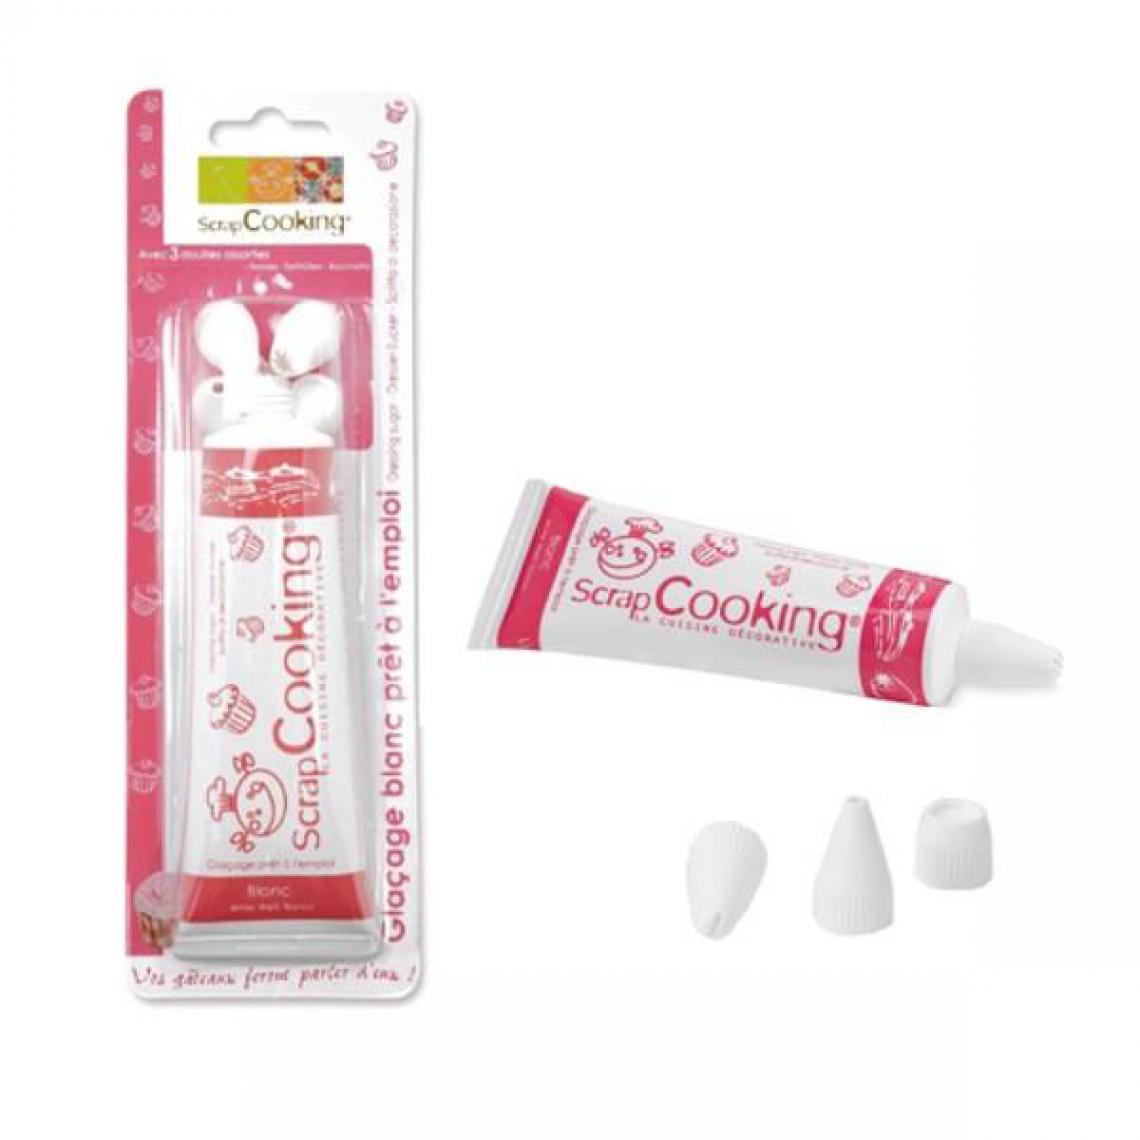 Scrapcooking - Glaçage blanc 100 g - Kits créatifs